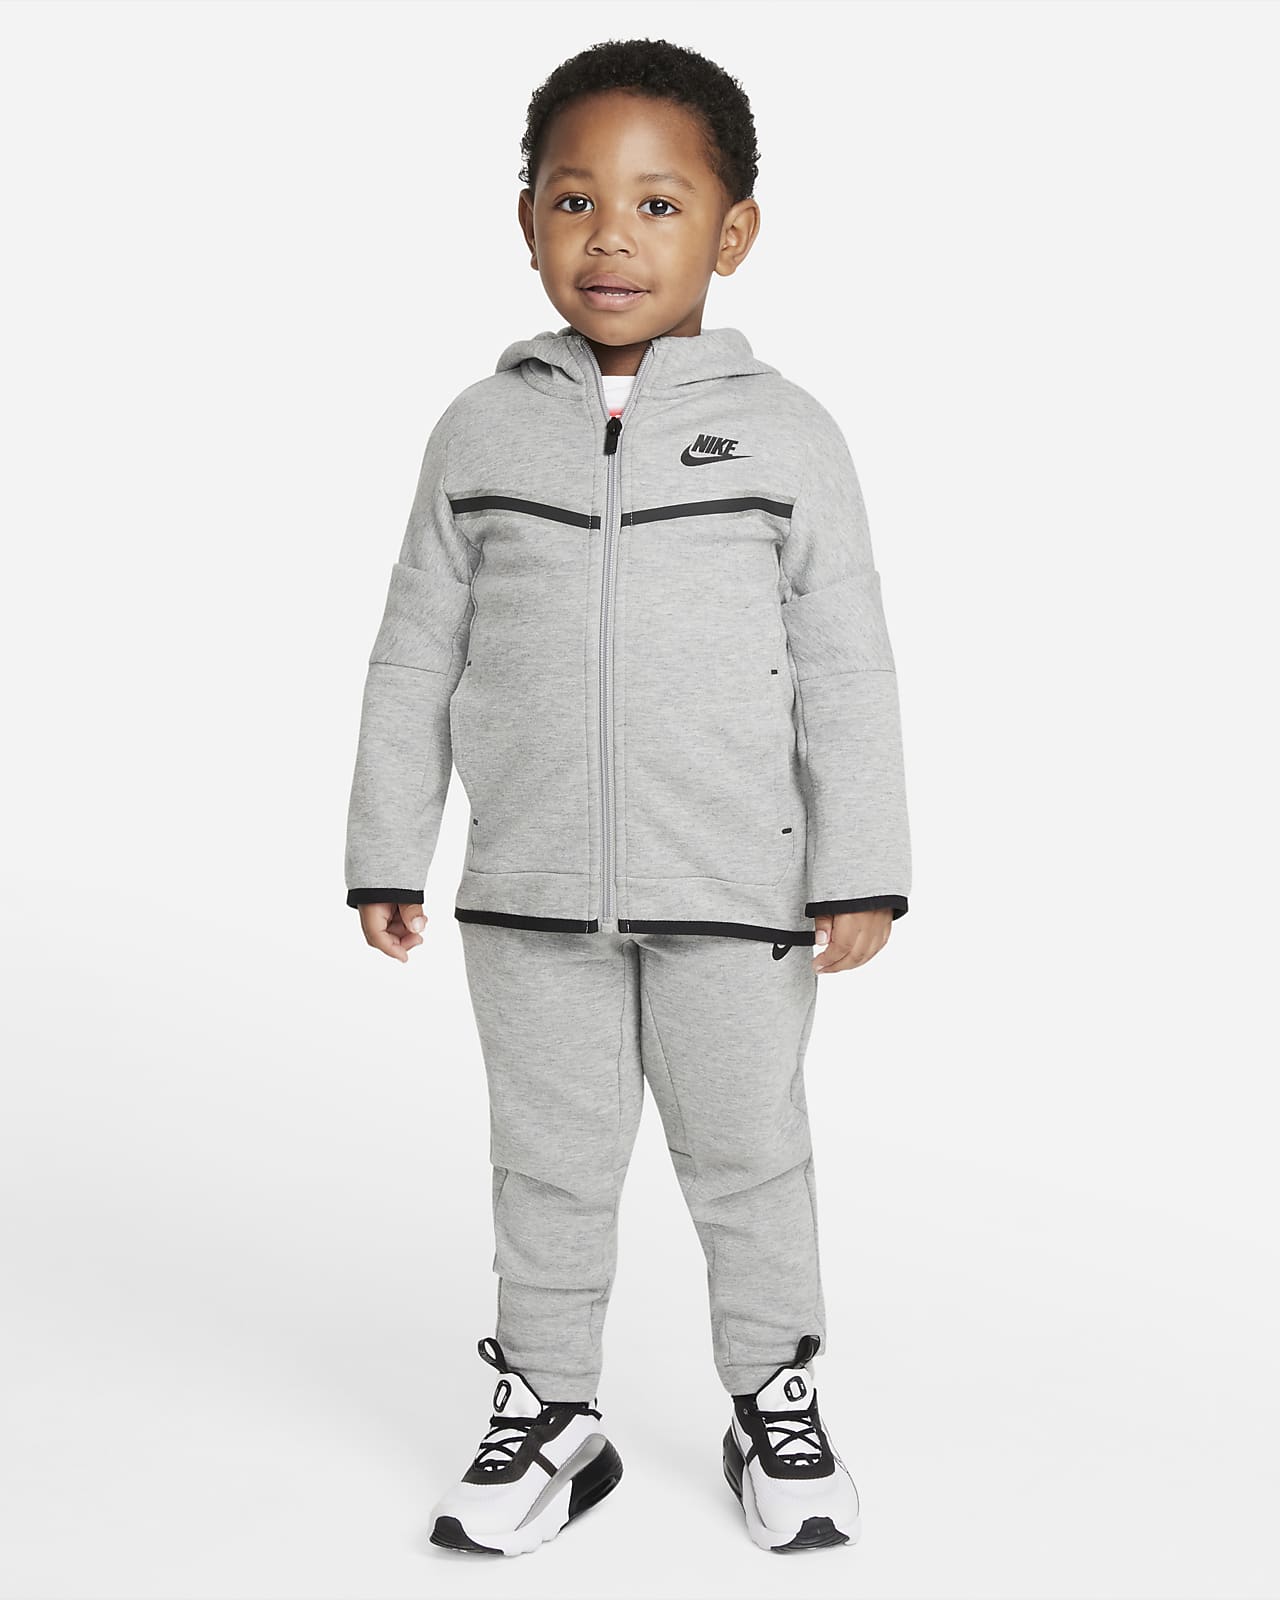 Nike Sportswear Tech Fleece Conjunt de dessuadora amb caputxa i pantalons - Infant